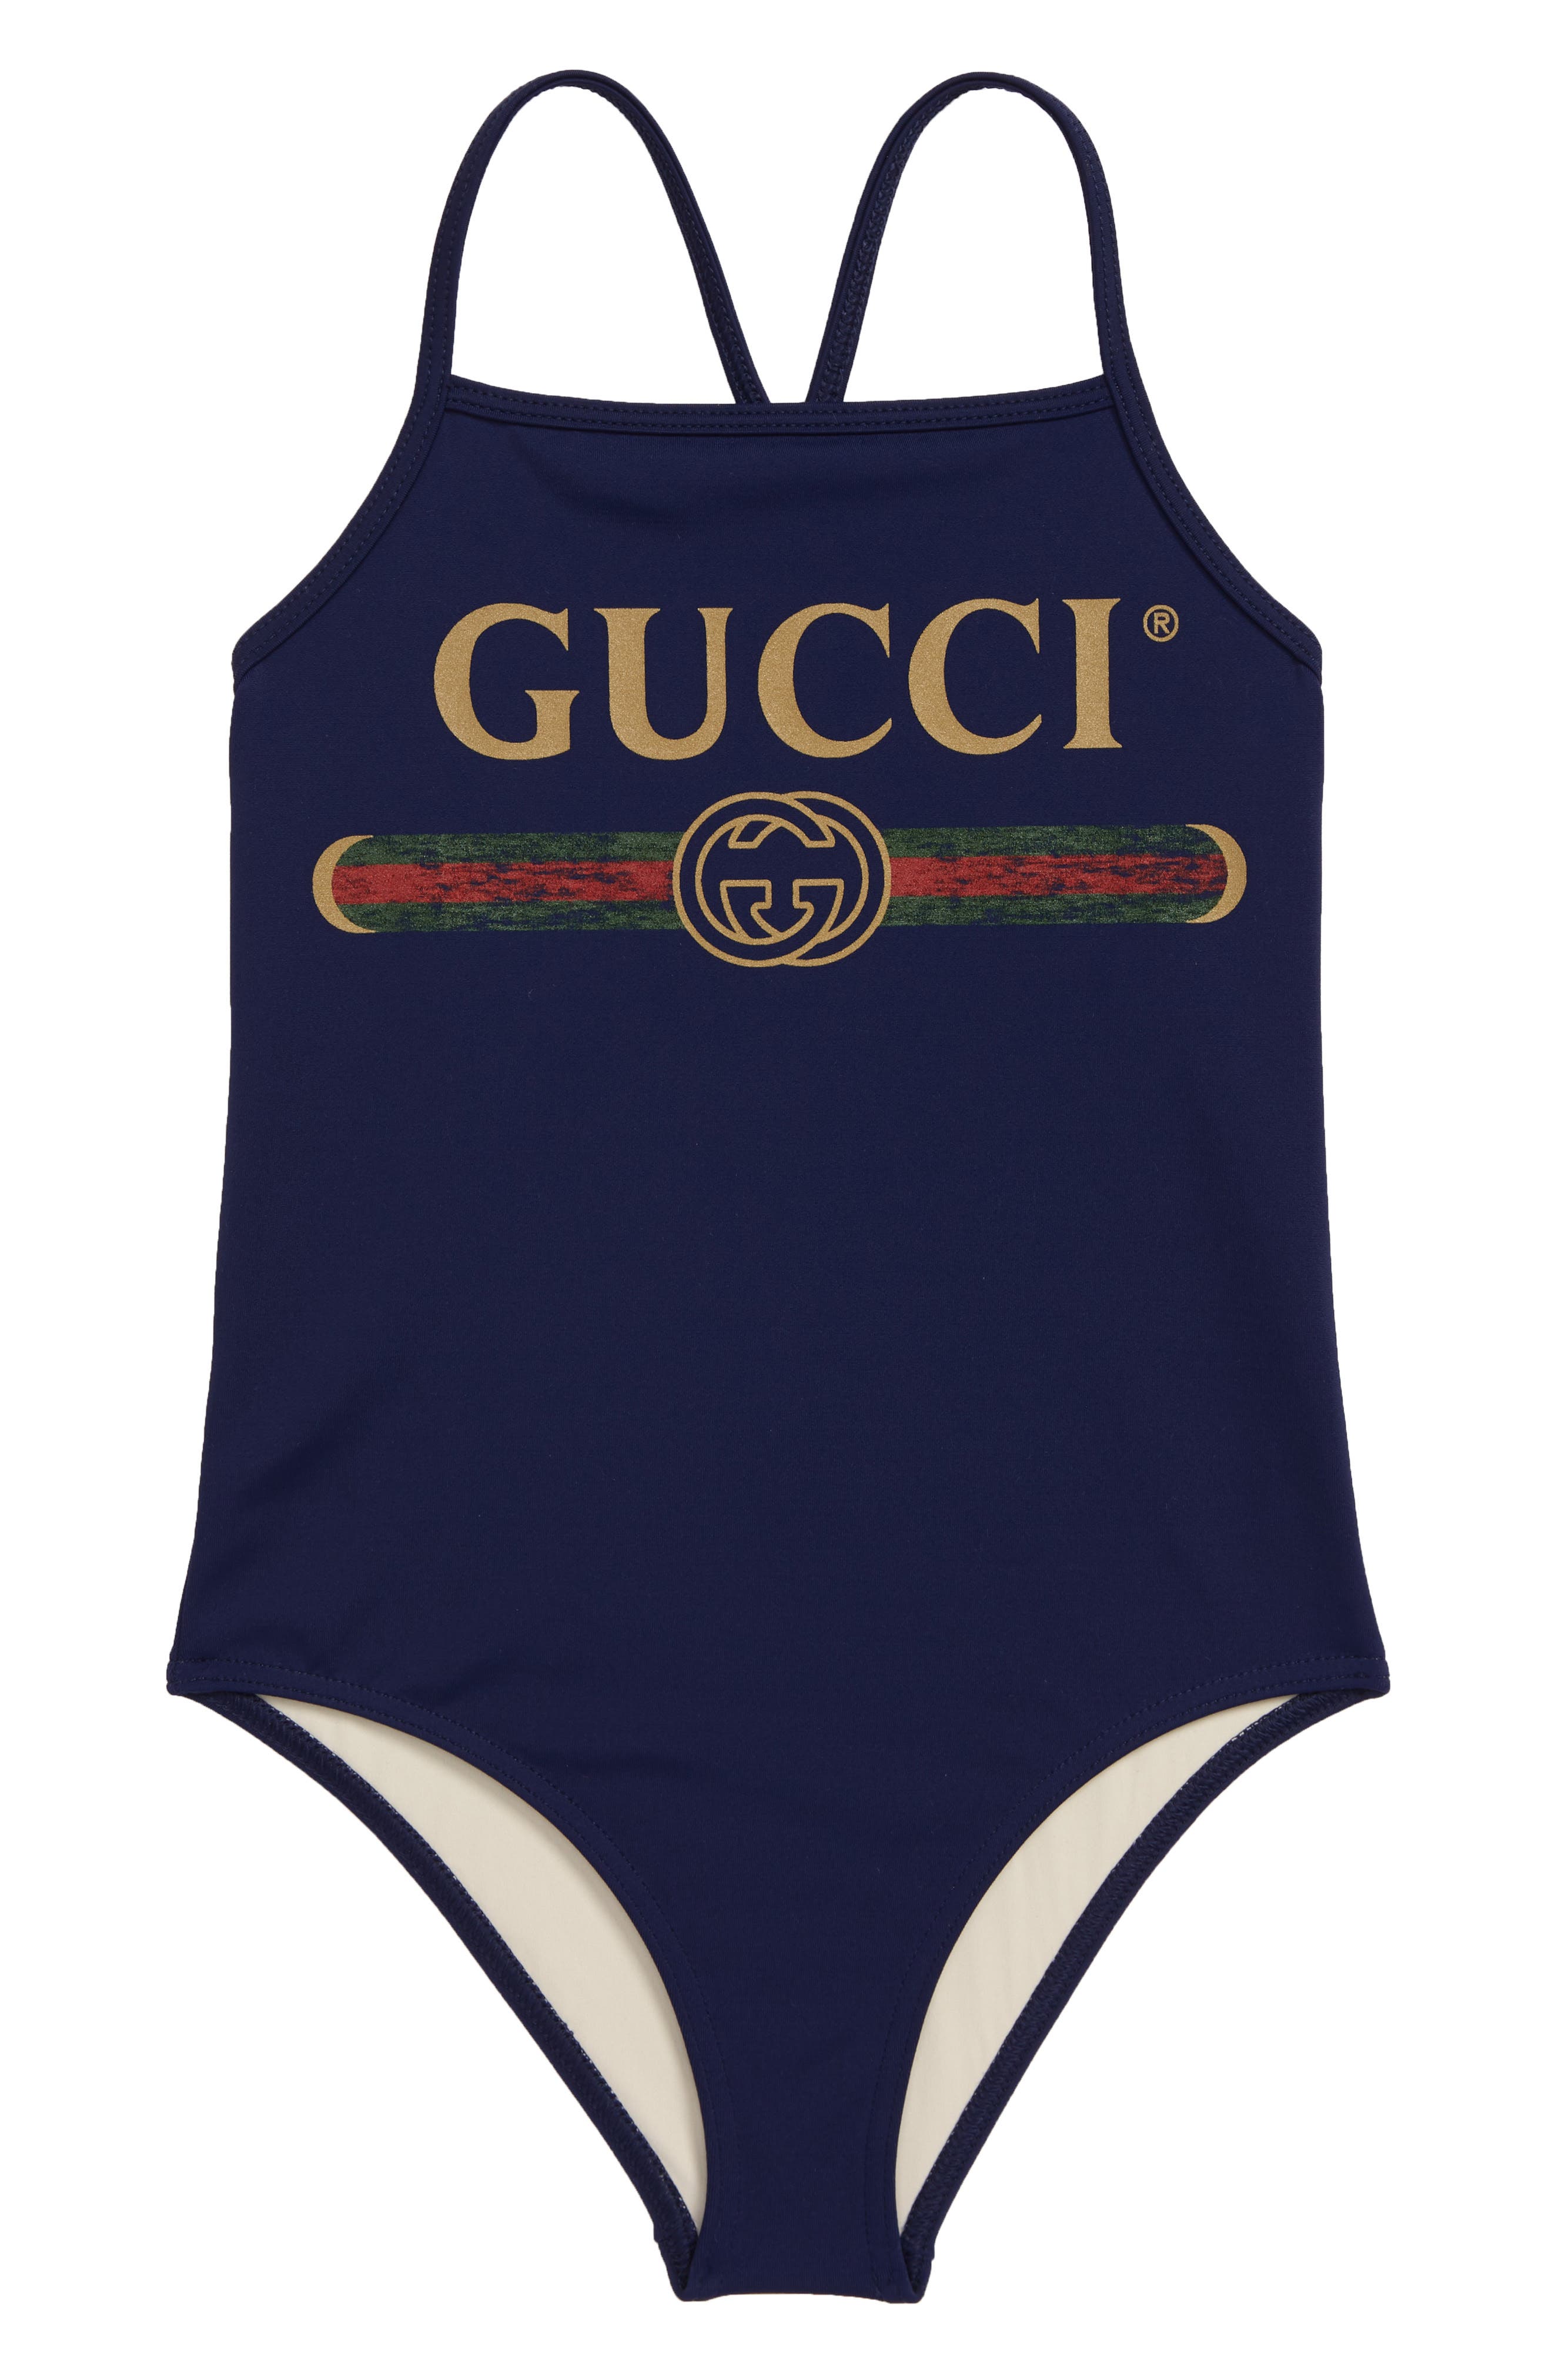 gucci swimsuit girls